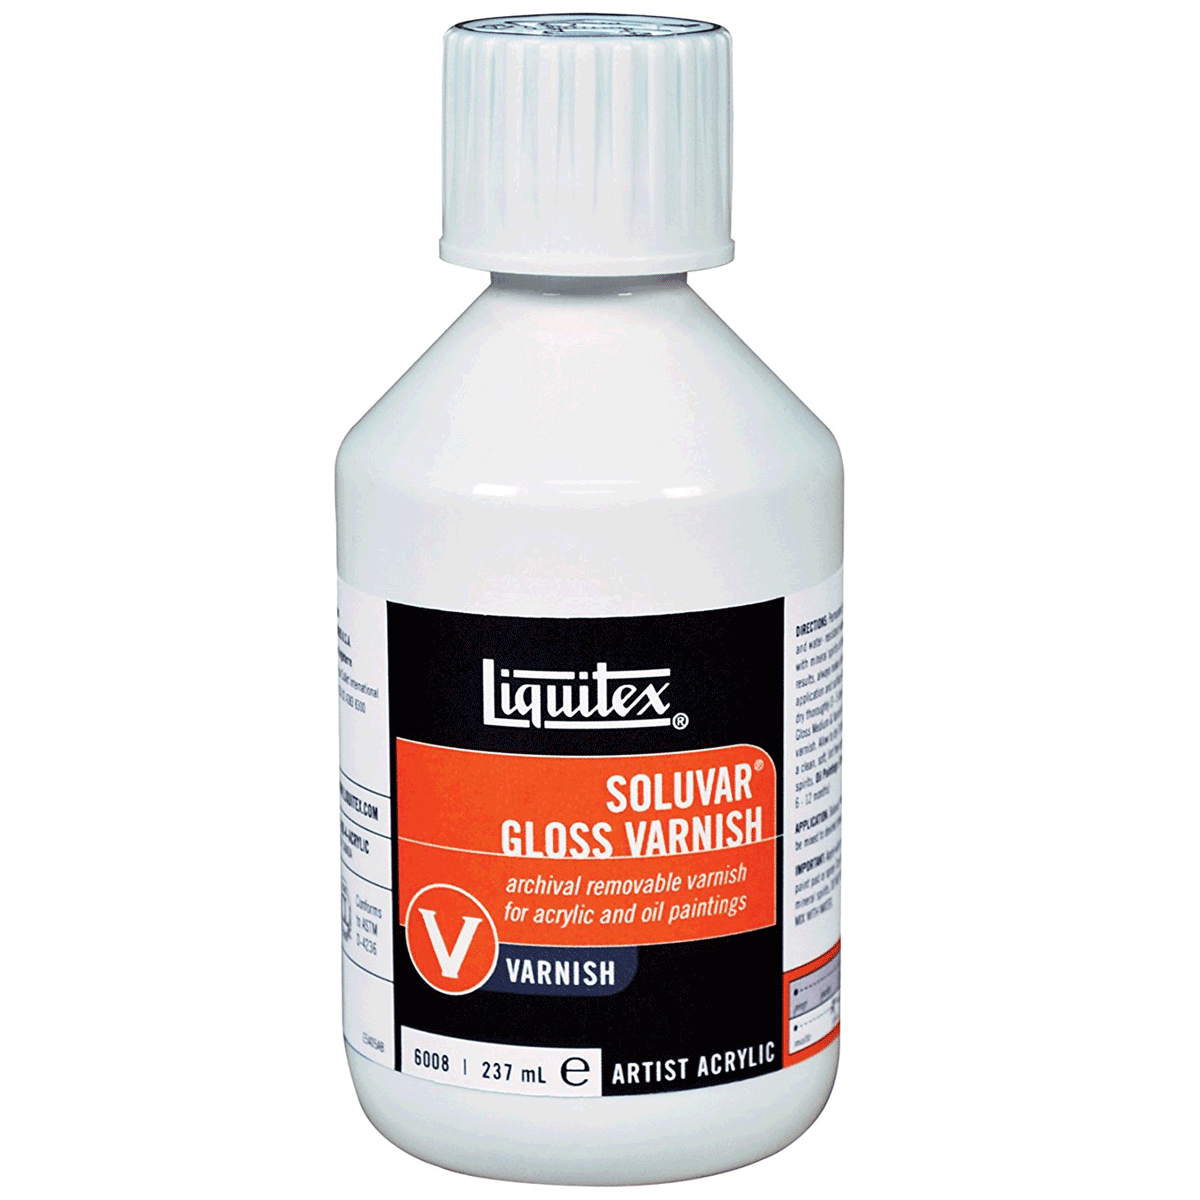 Liquitex Professional Soluvar Gloss Varnish, 237 ml (8oz)